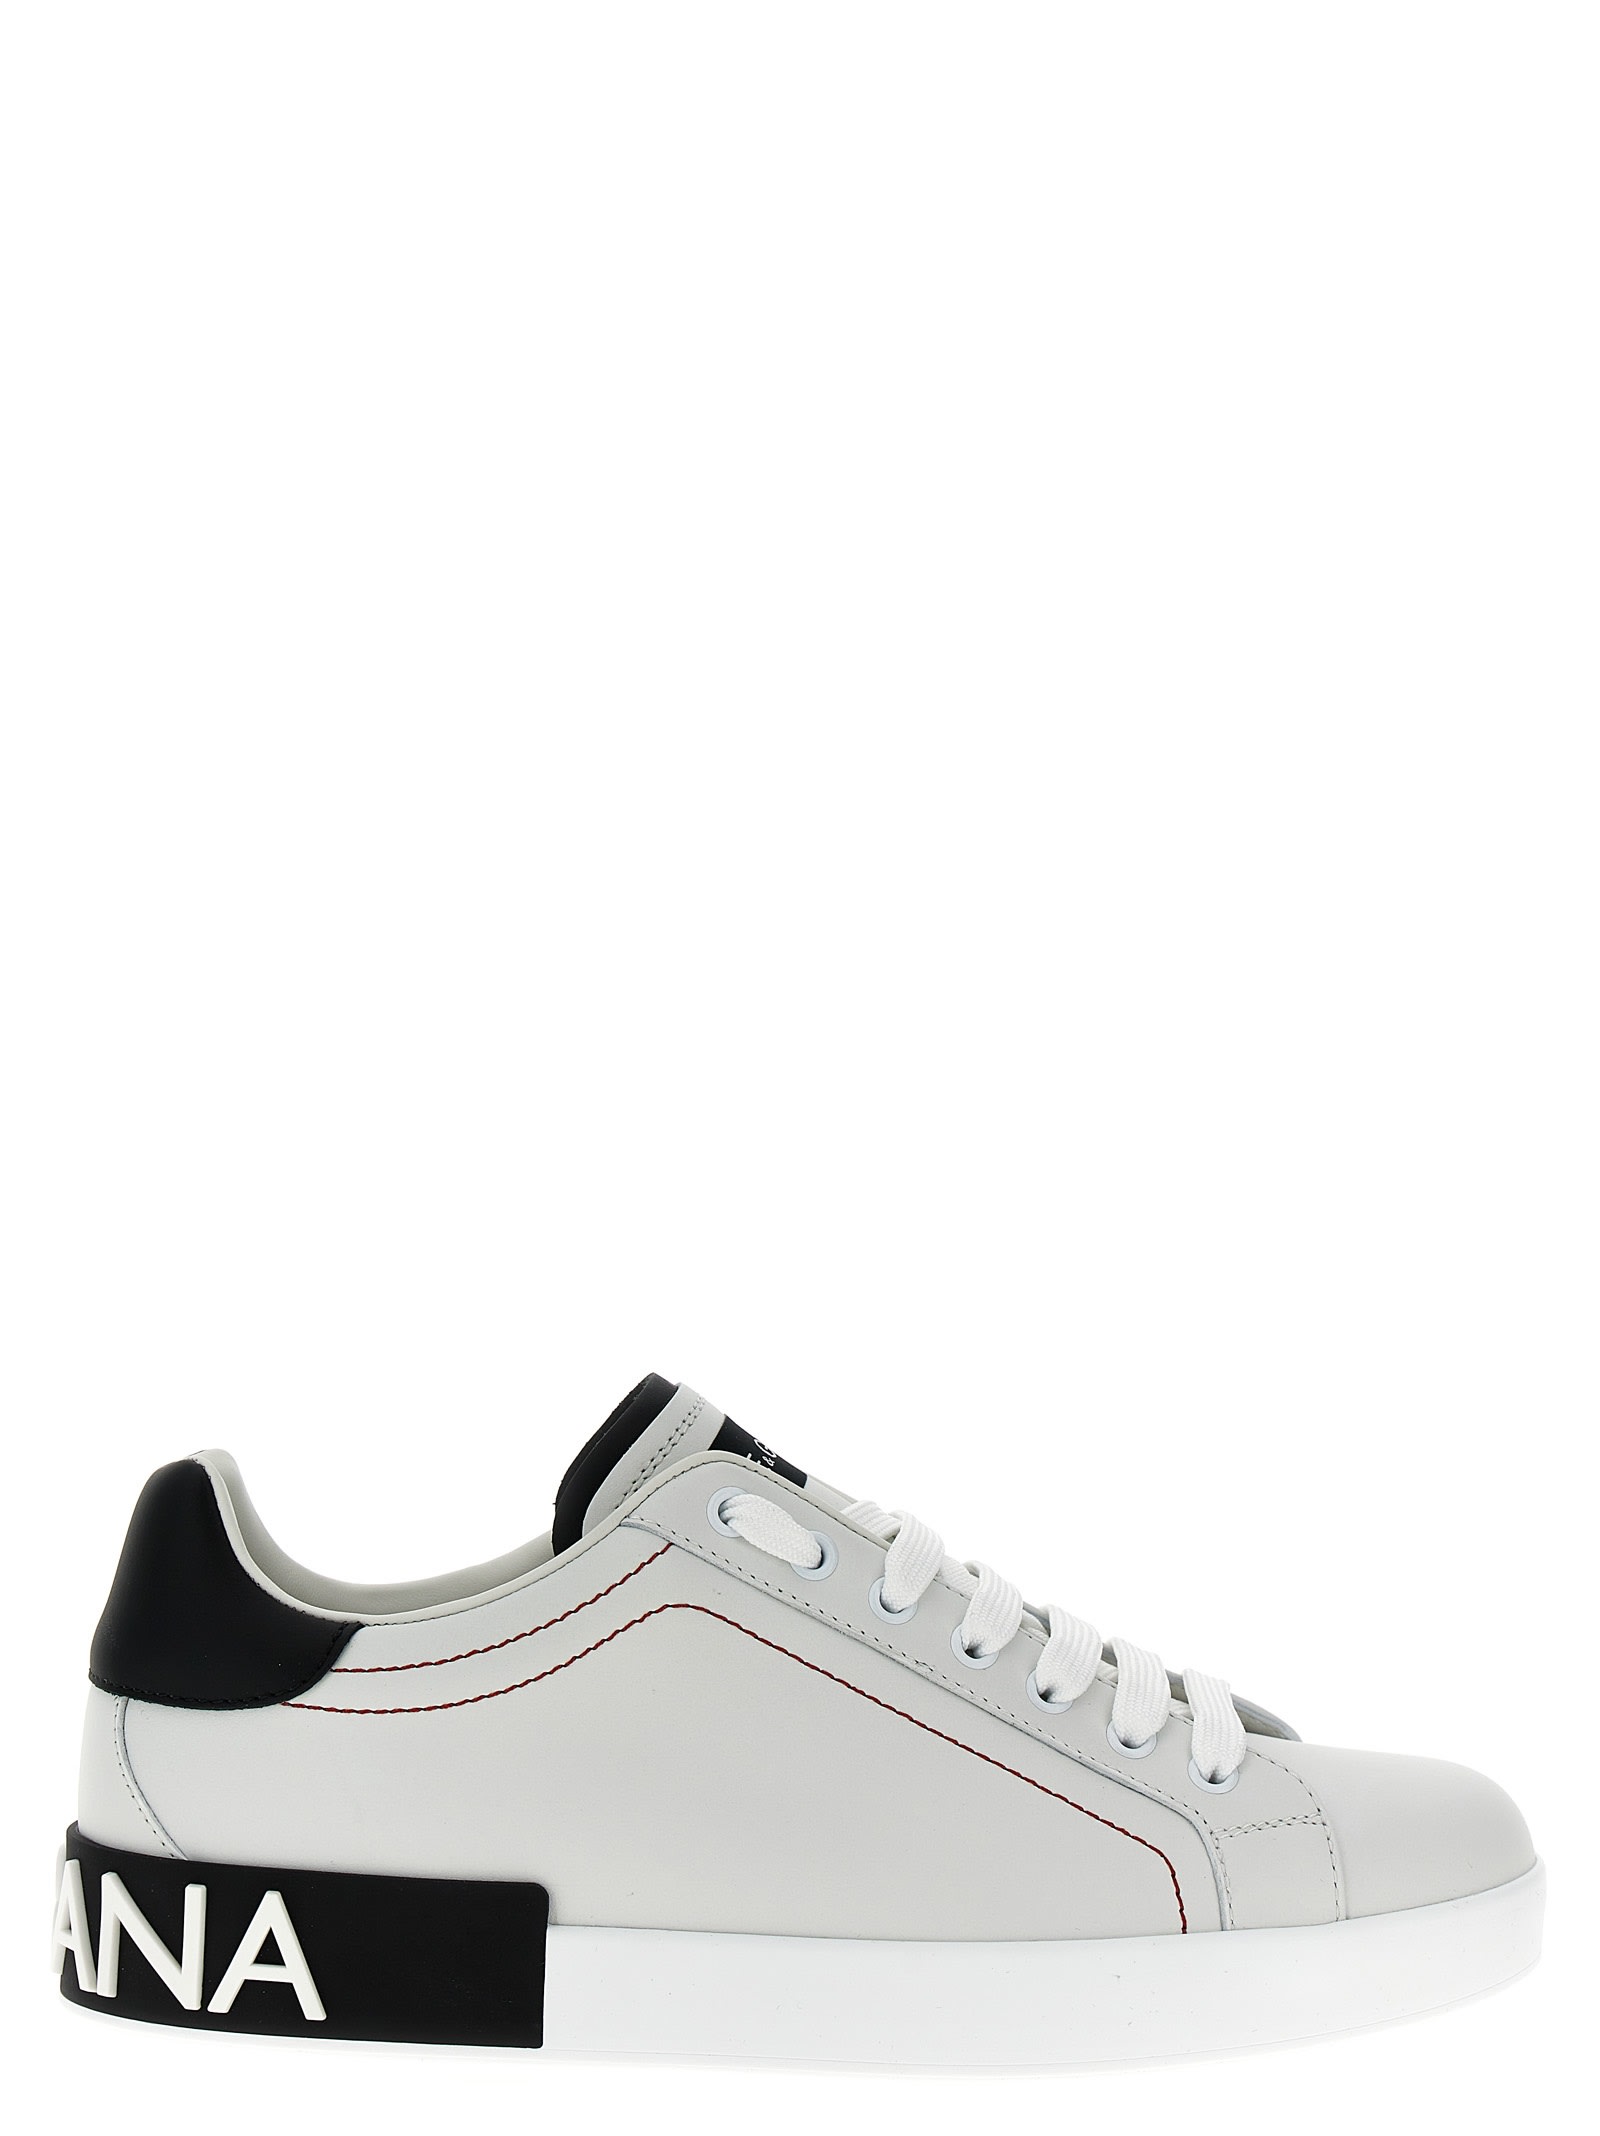 Dolce & Gabbana Portofino Sneakers In White/black